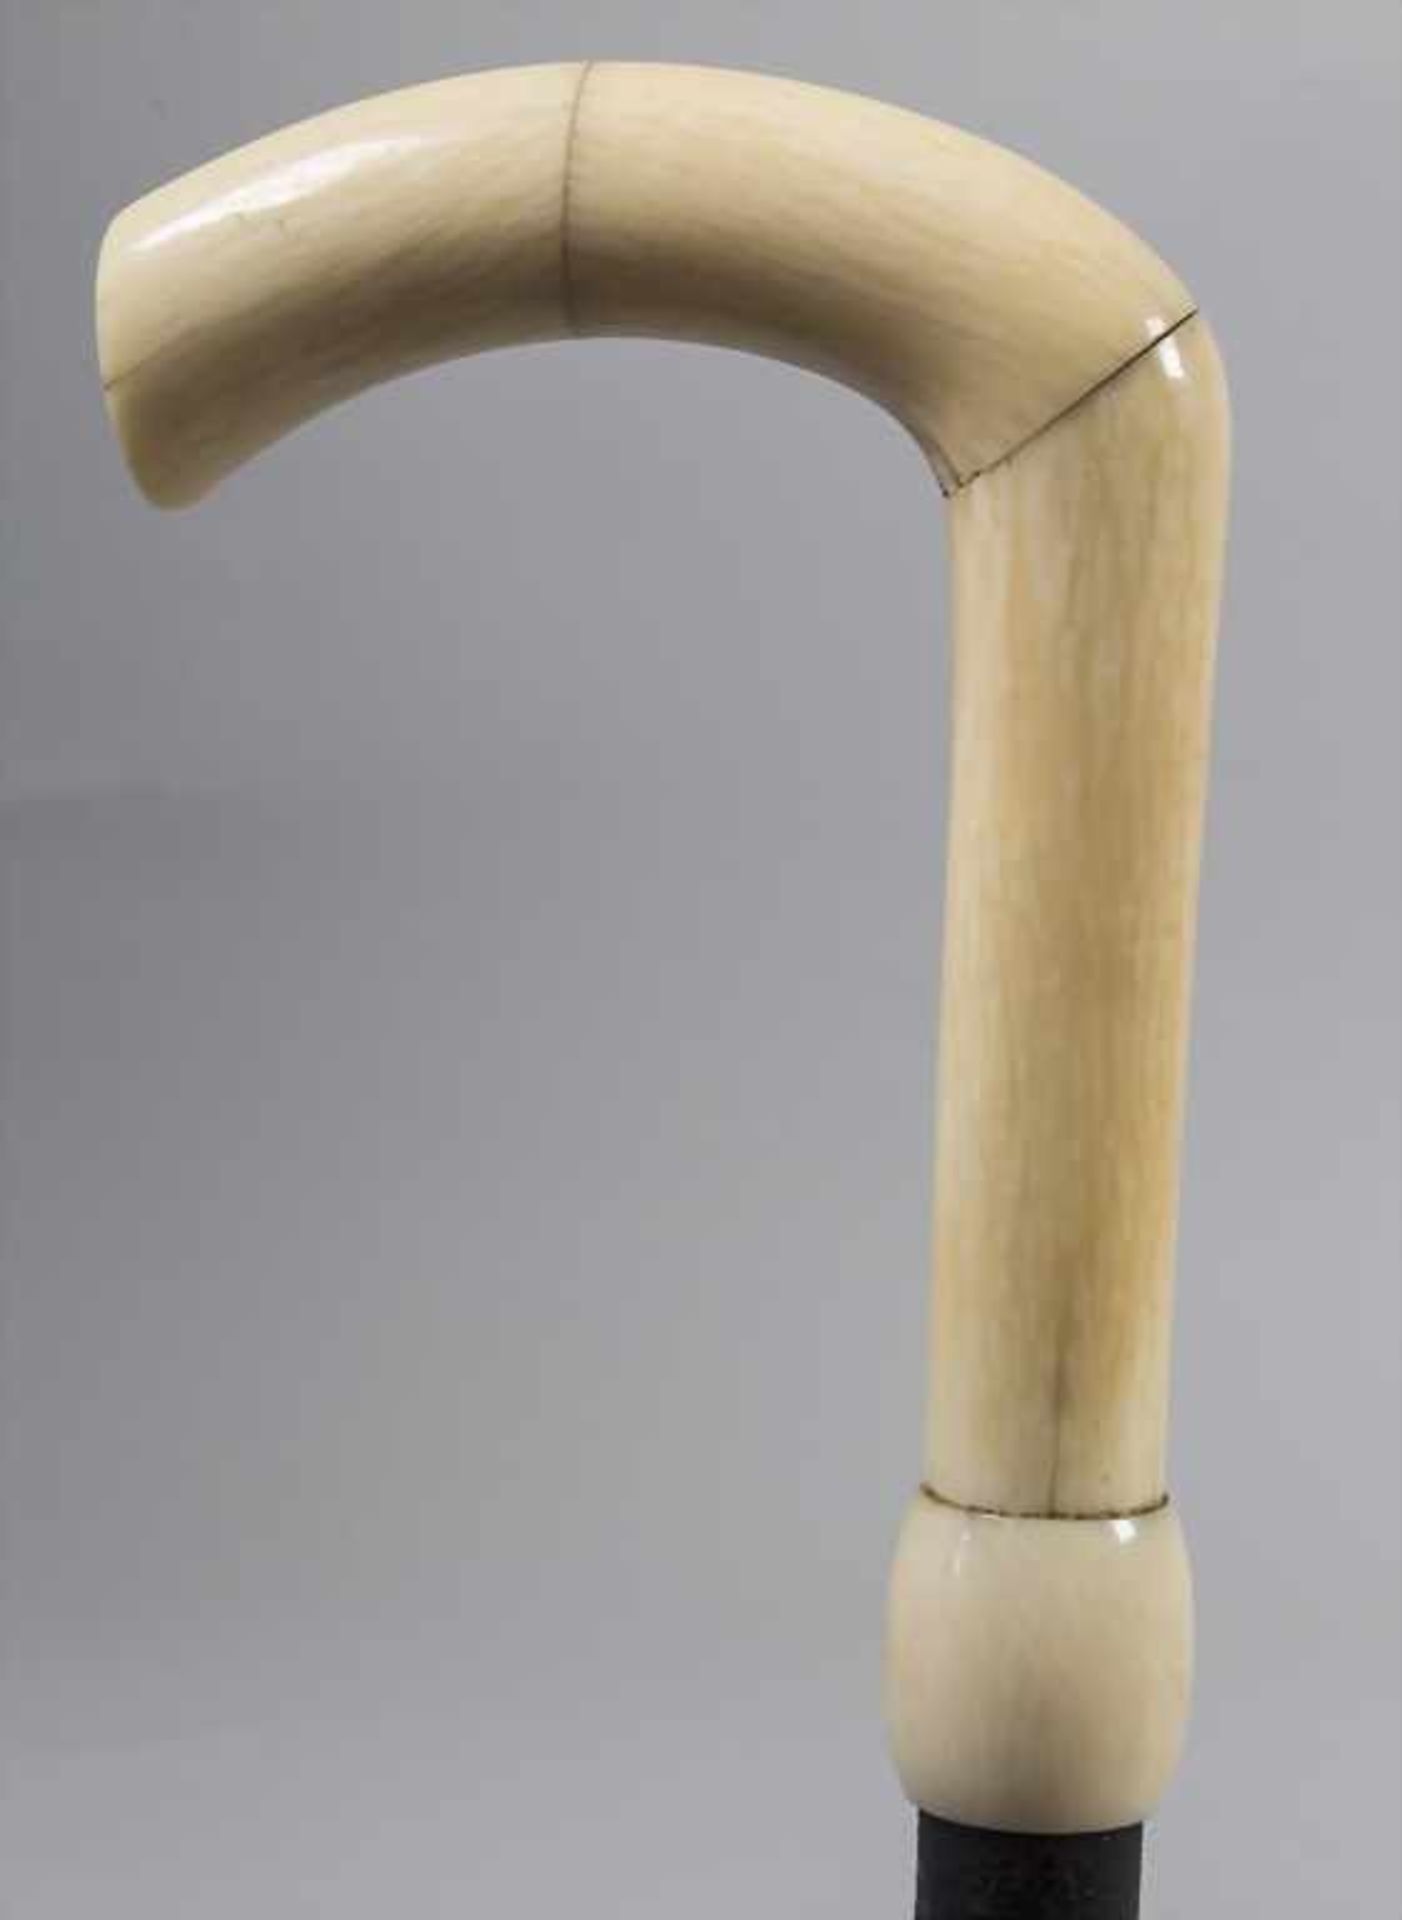 Sammlung 10 Gehstöcke / A collection of 10 canes with ivory handle - Bild 17 aus 27